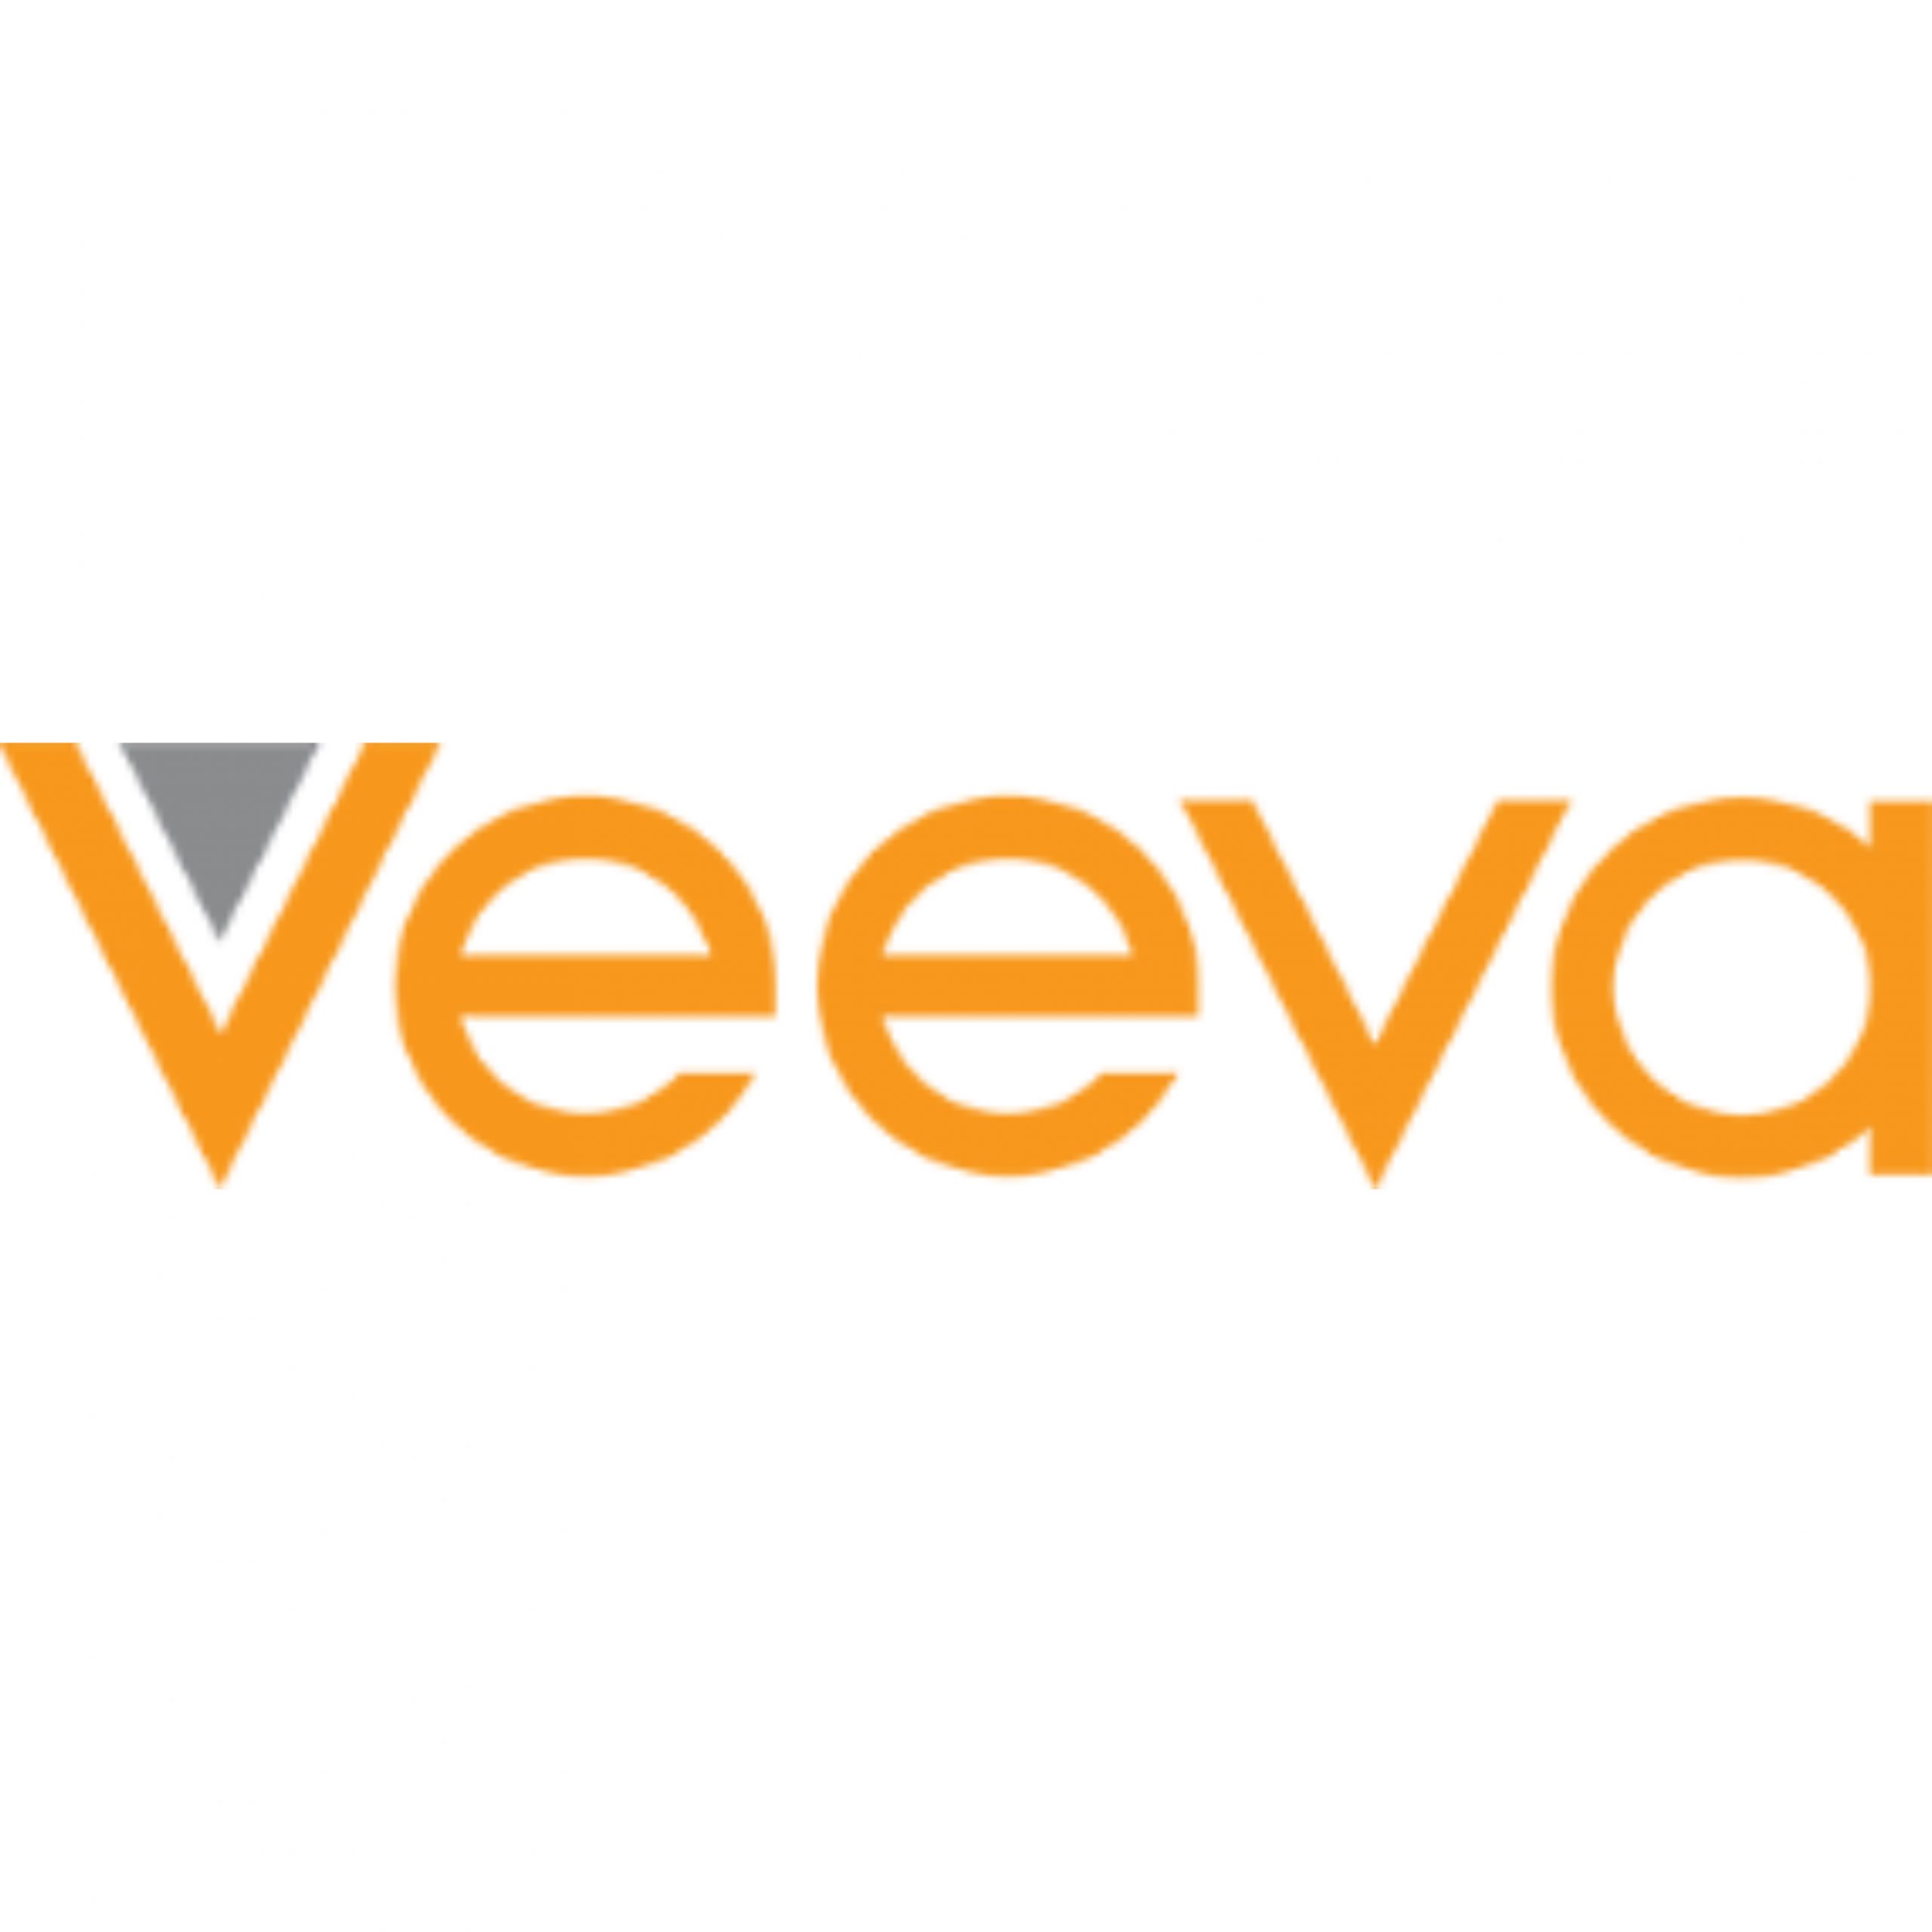 Leading India Biopharma Standardizes on Veeva Vault PromoMats to Speed Scientific Content Distribution-thumnail